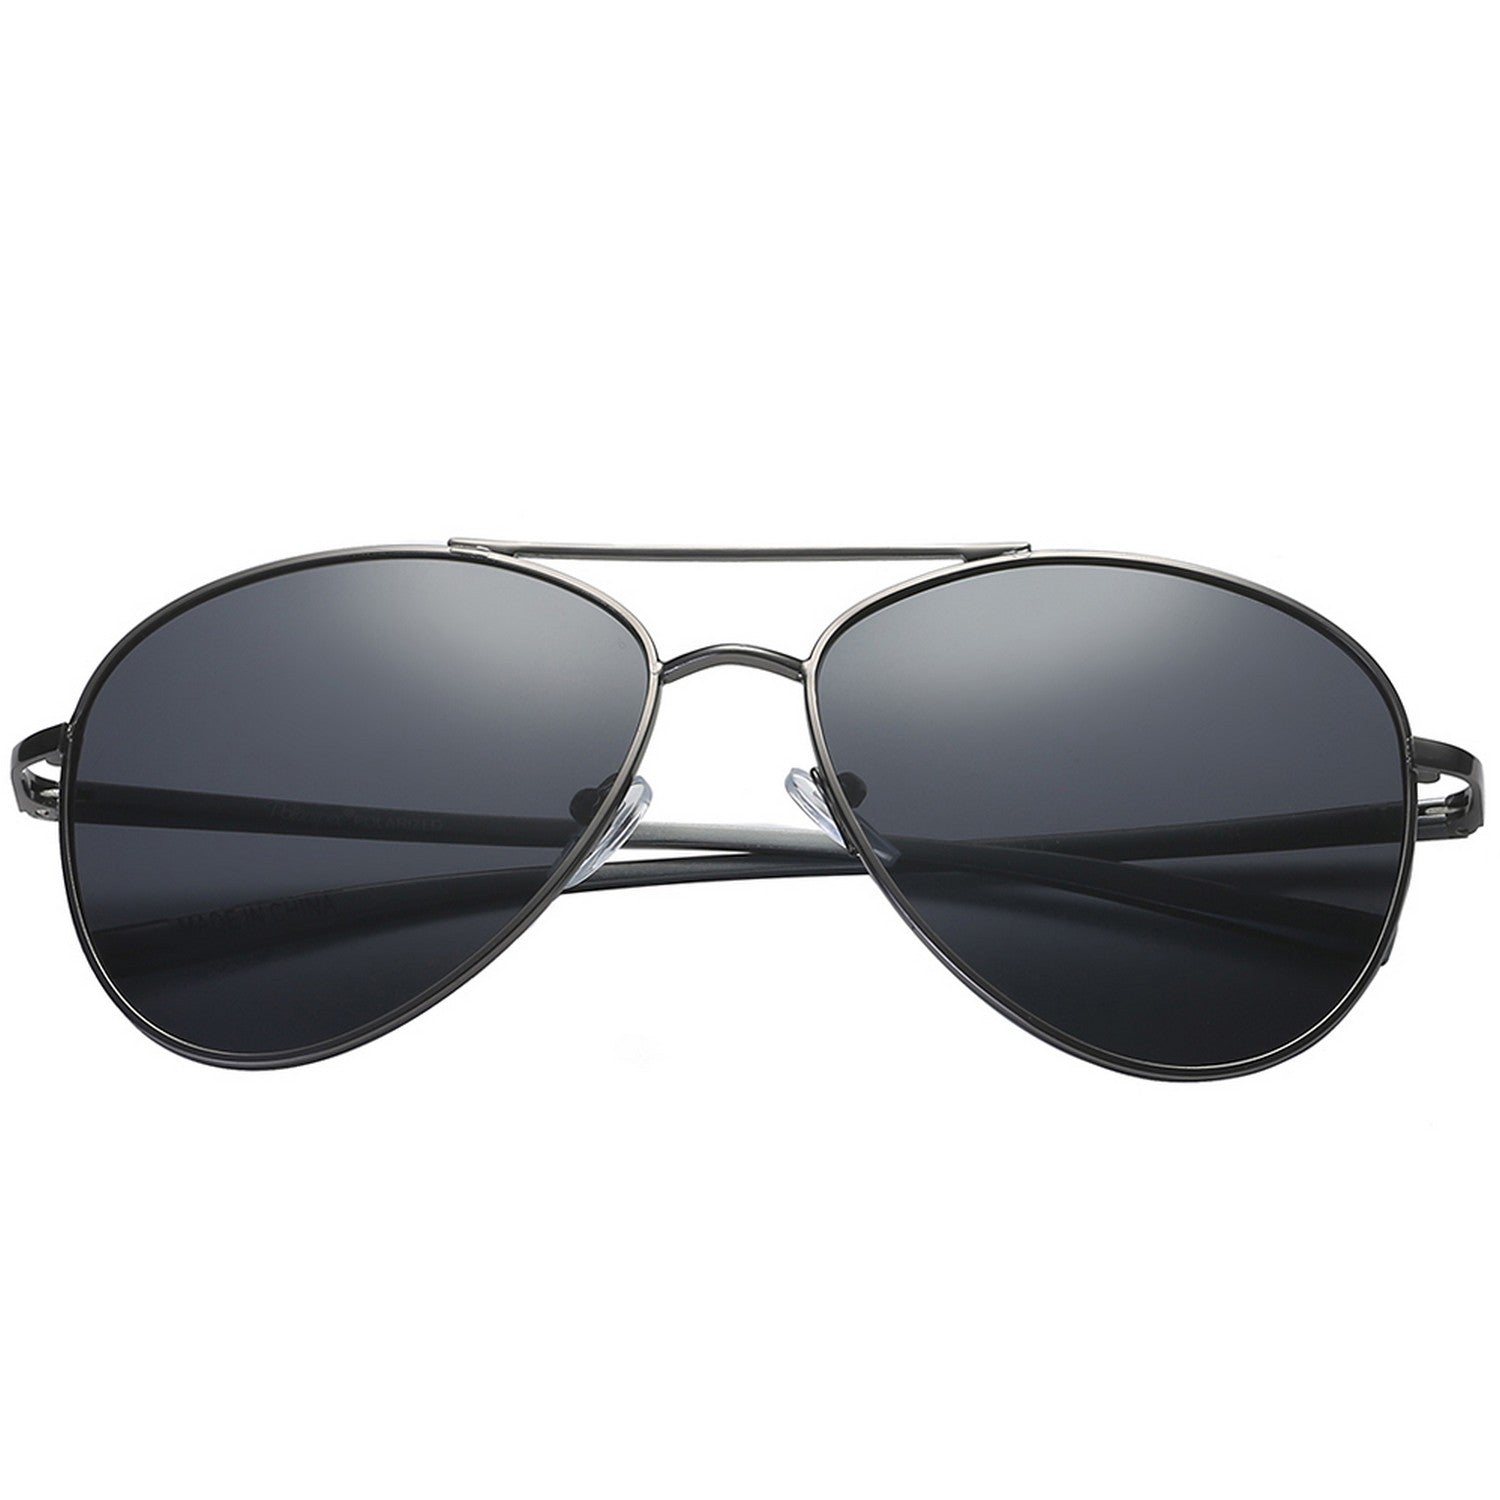 Polarspex Polarized Aviator Style Sunglasses with Aluminum Pewter Frames and Polarized Smoke Lenses for Men and Women